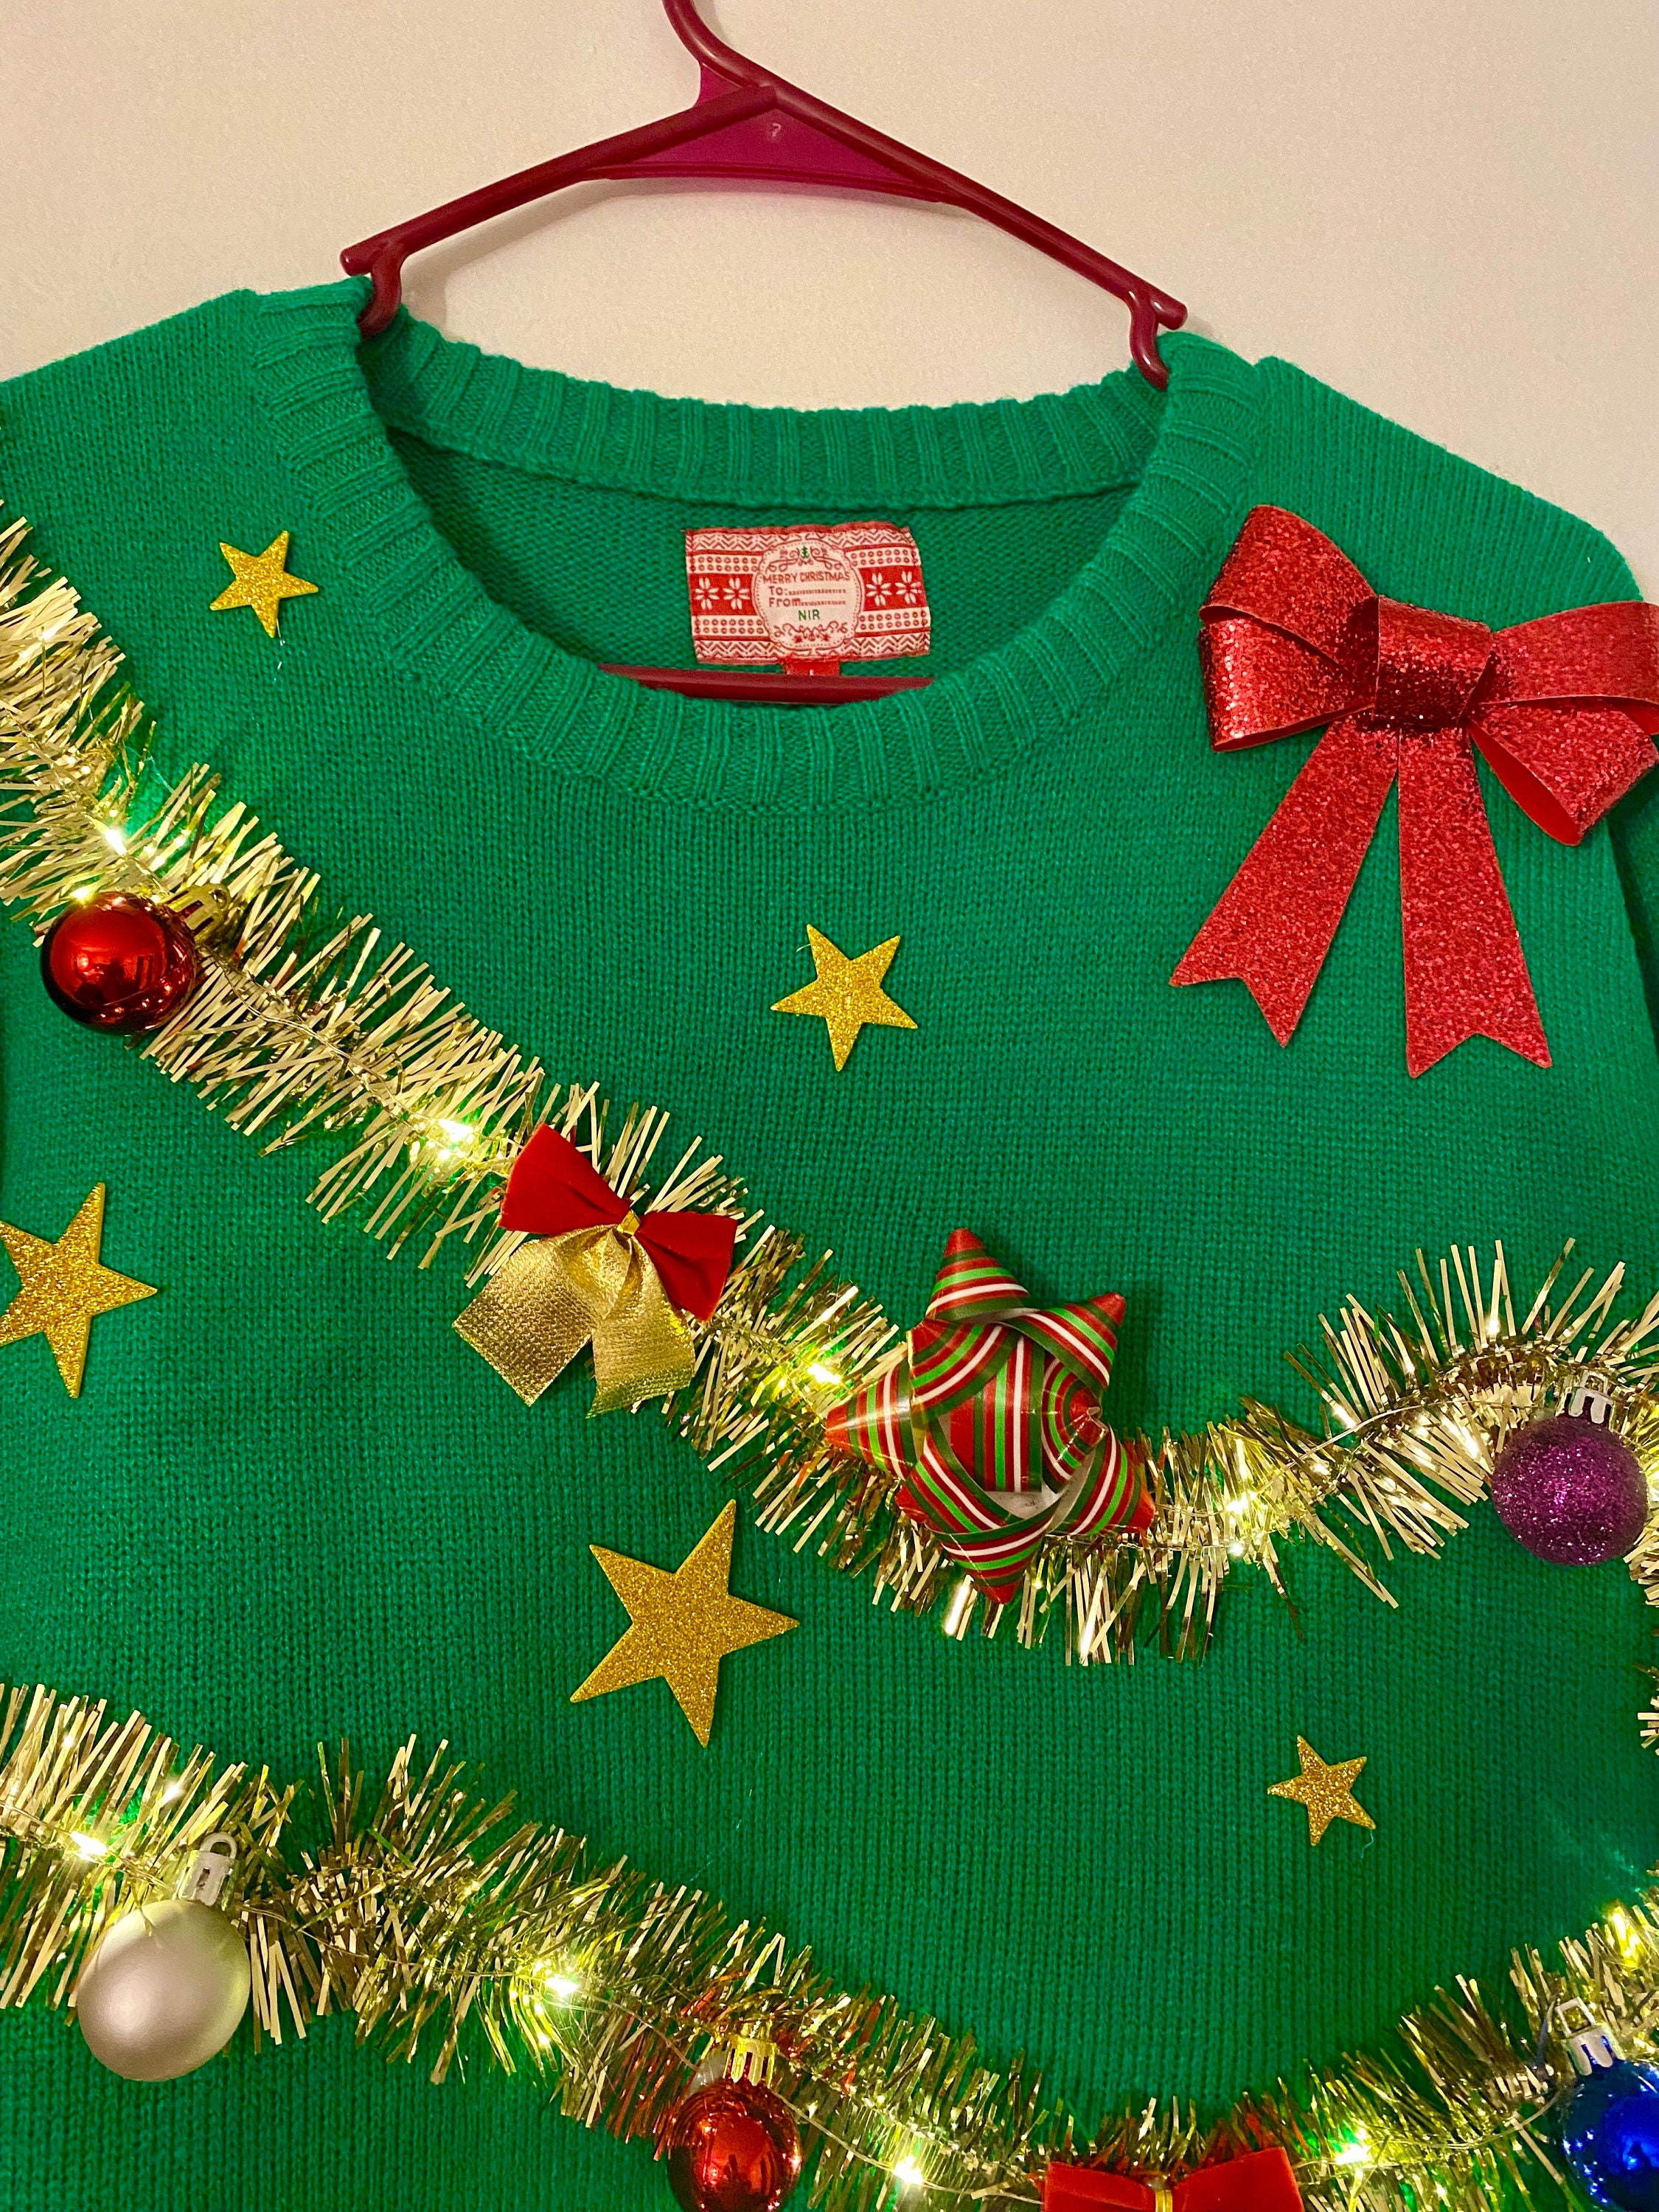 A Lights up Ugly Christmas Sweater, Handmade Christmas Sweater, Tacky ...